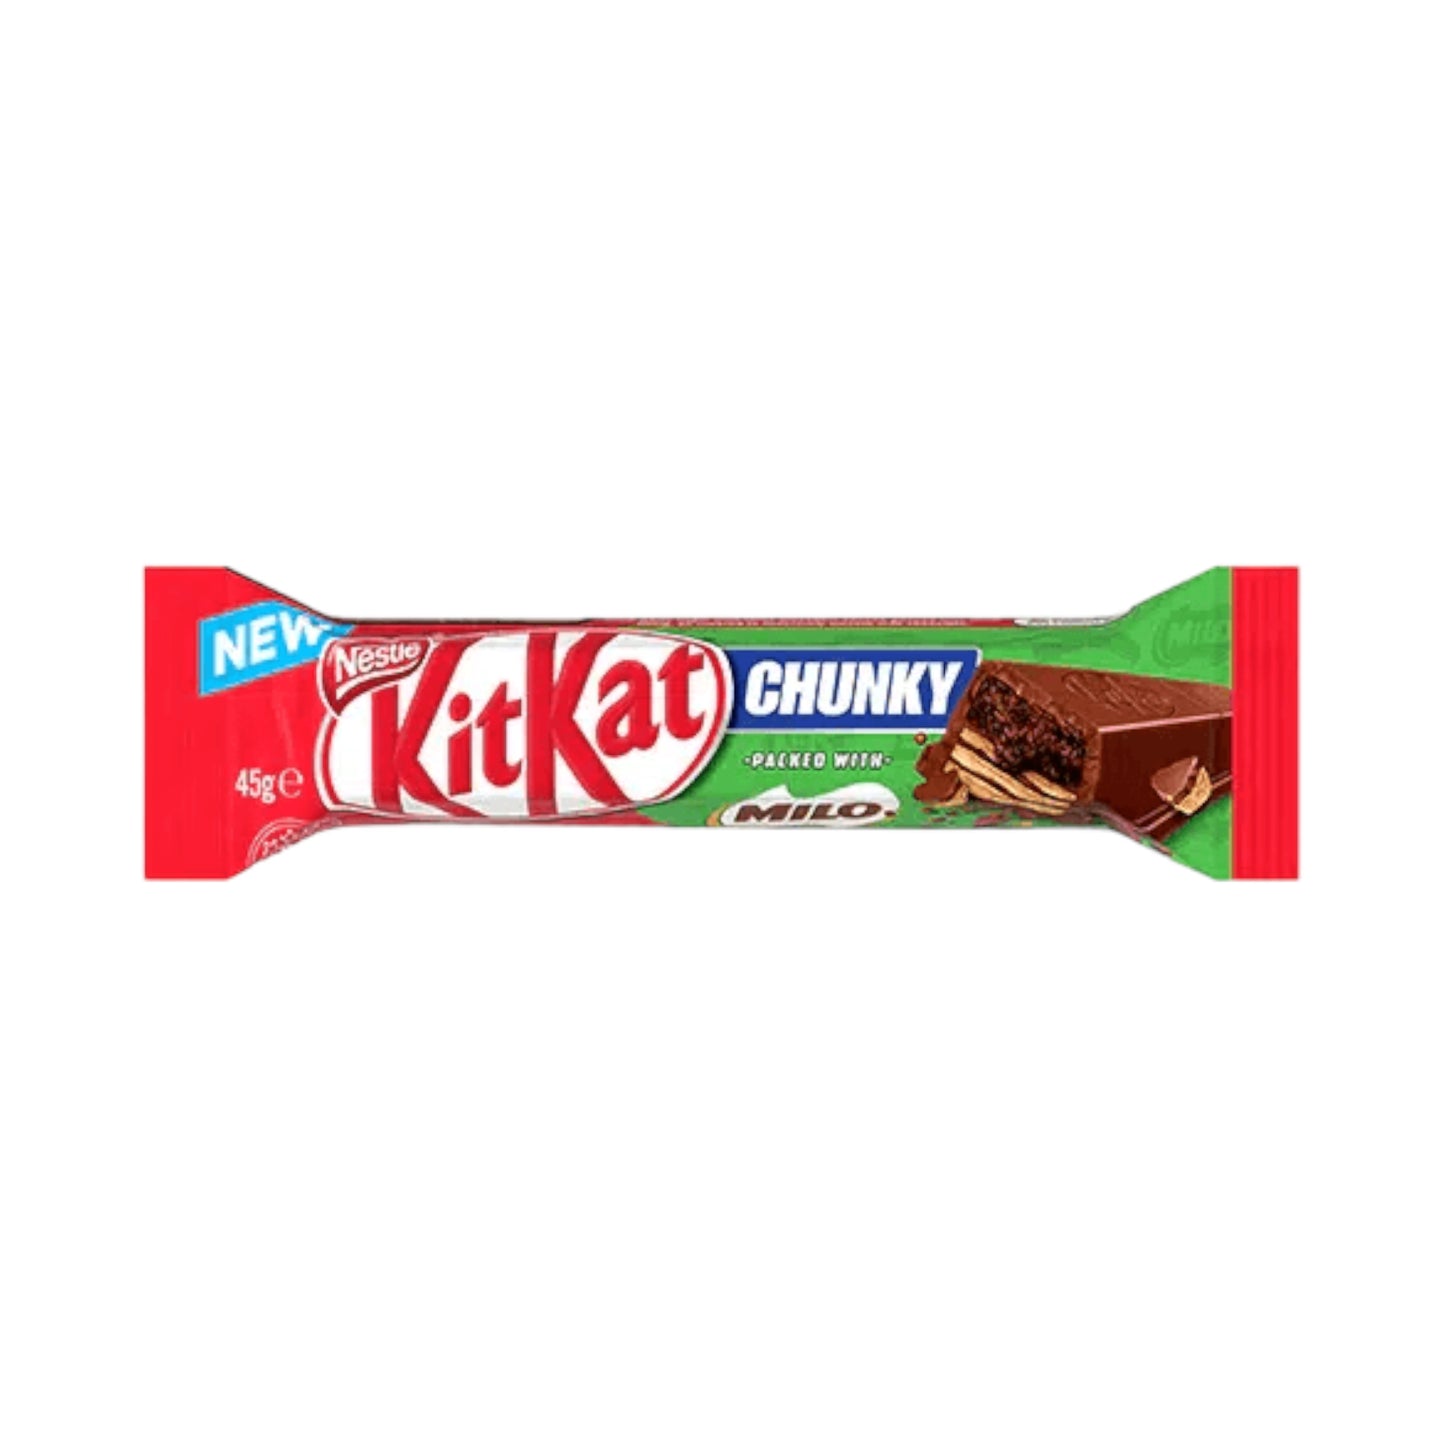 Kit Kat Chunky Milo 45g (AUSTRALIA)